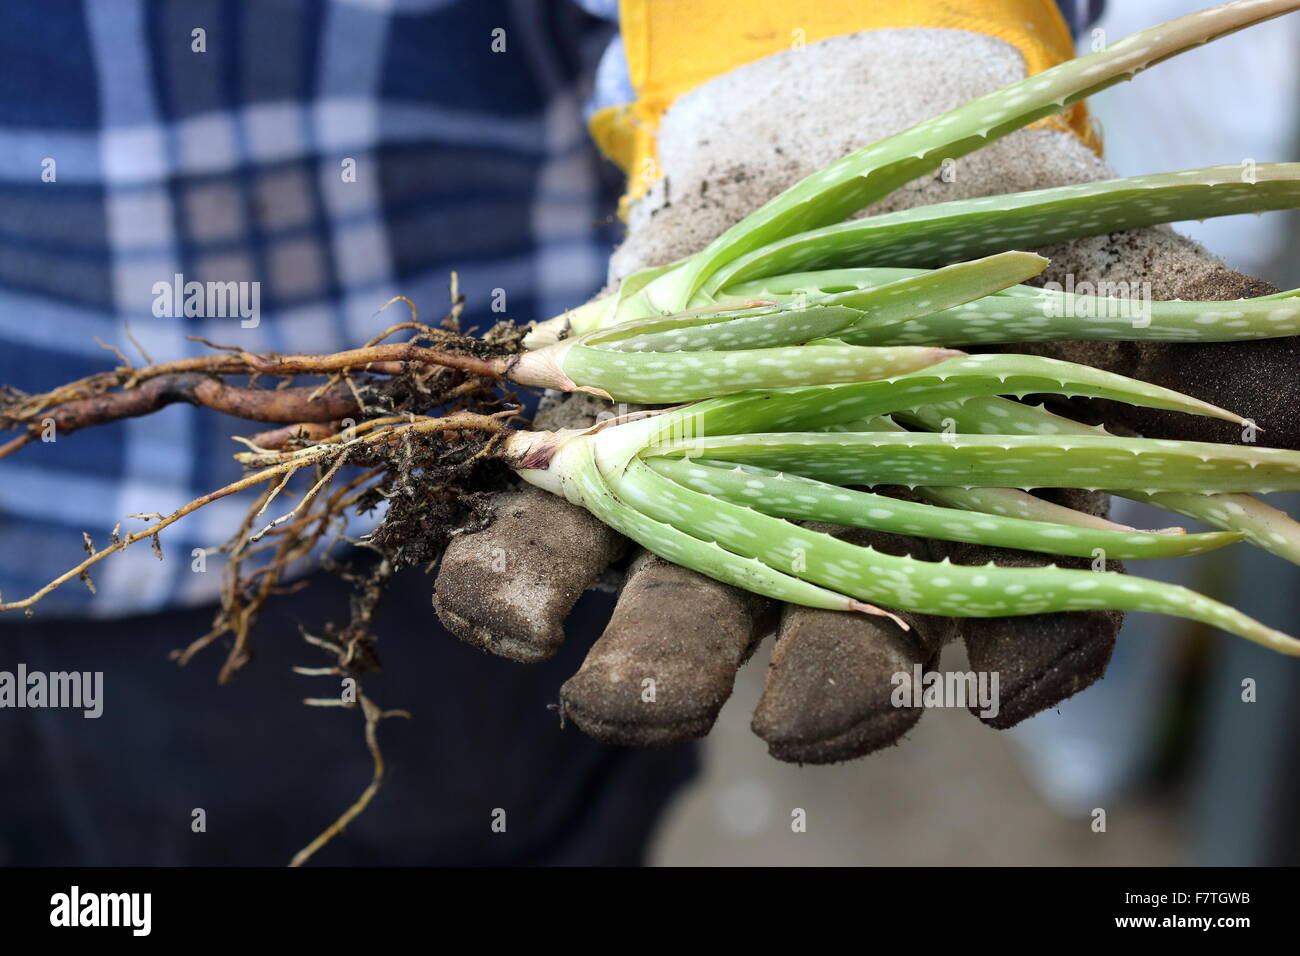 Hands holding young aloe vera plants Stock Photo